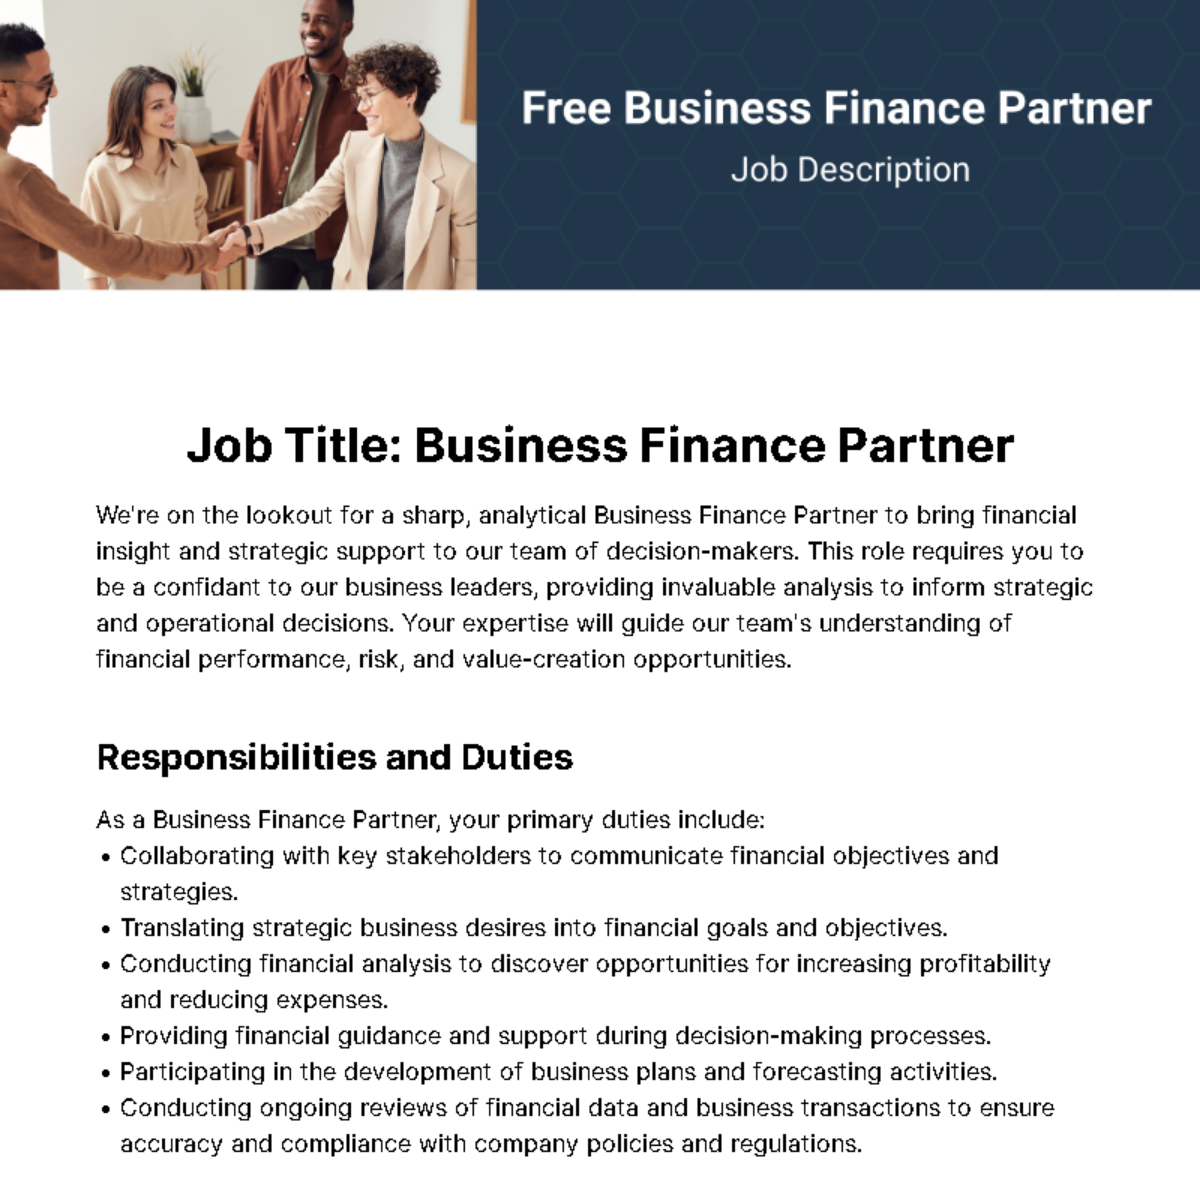 Free Business Finance Partner Job Description Template